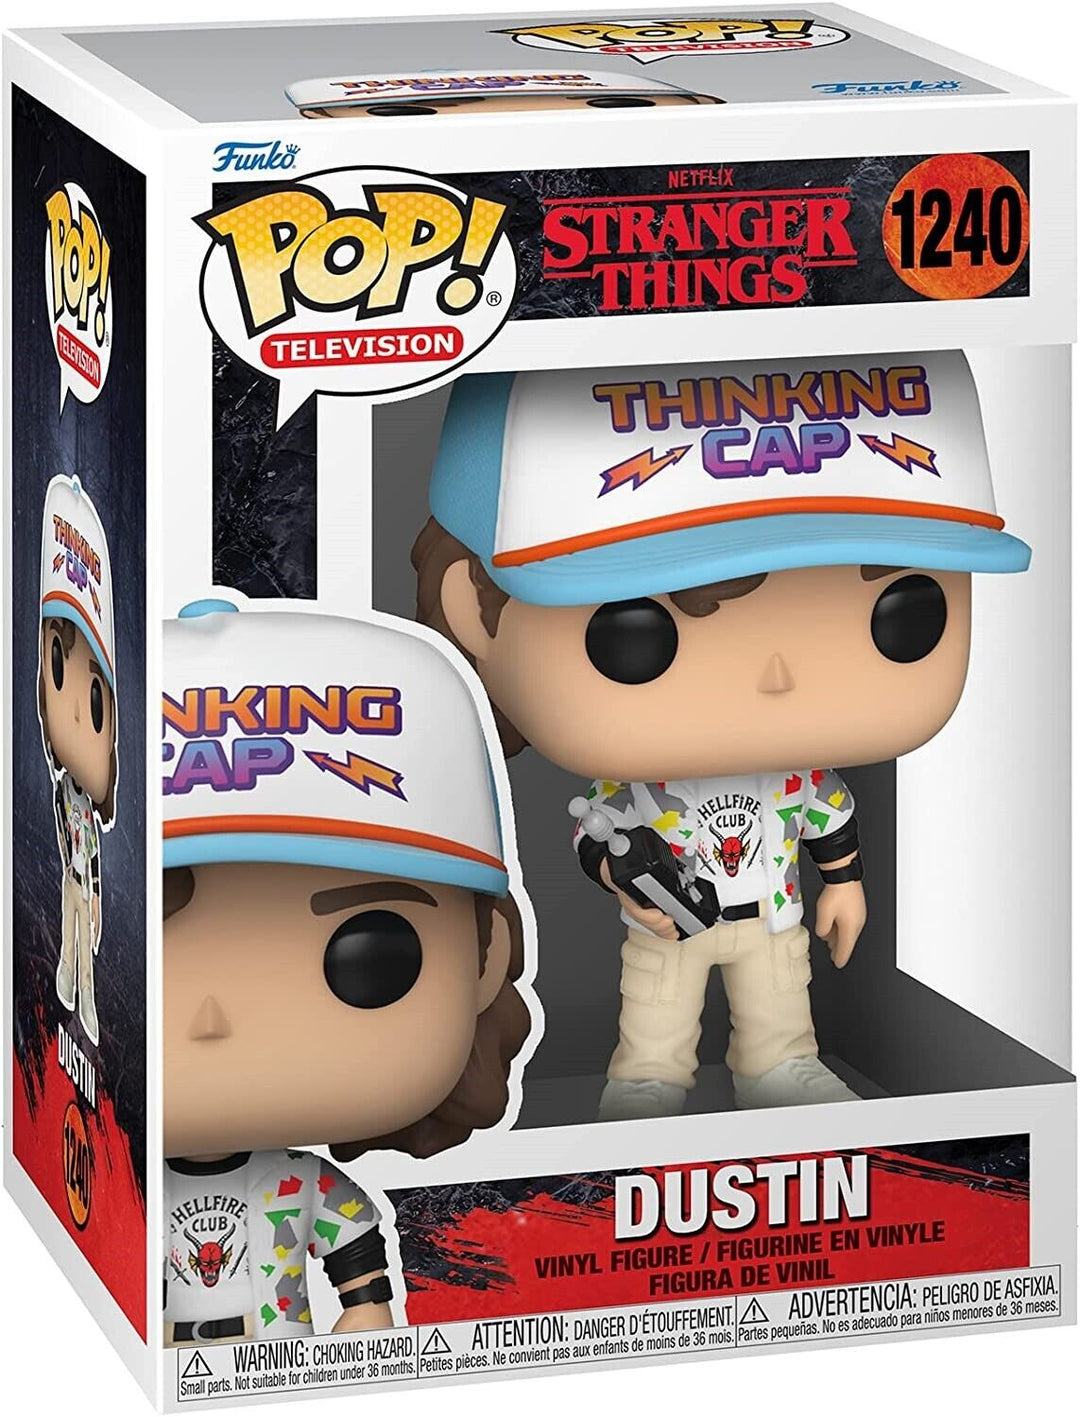 Dustin with Thinking Cap Stranger Things Funko POP! Vinyl Figure